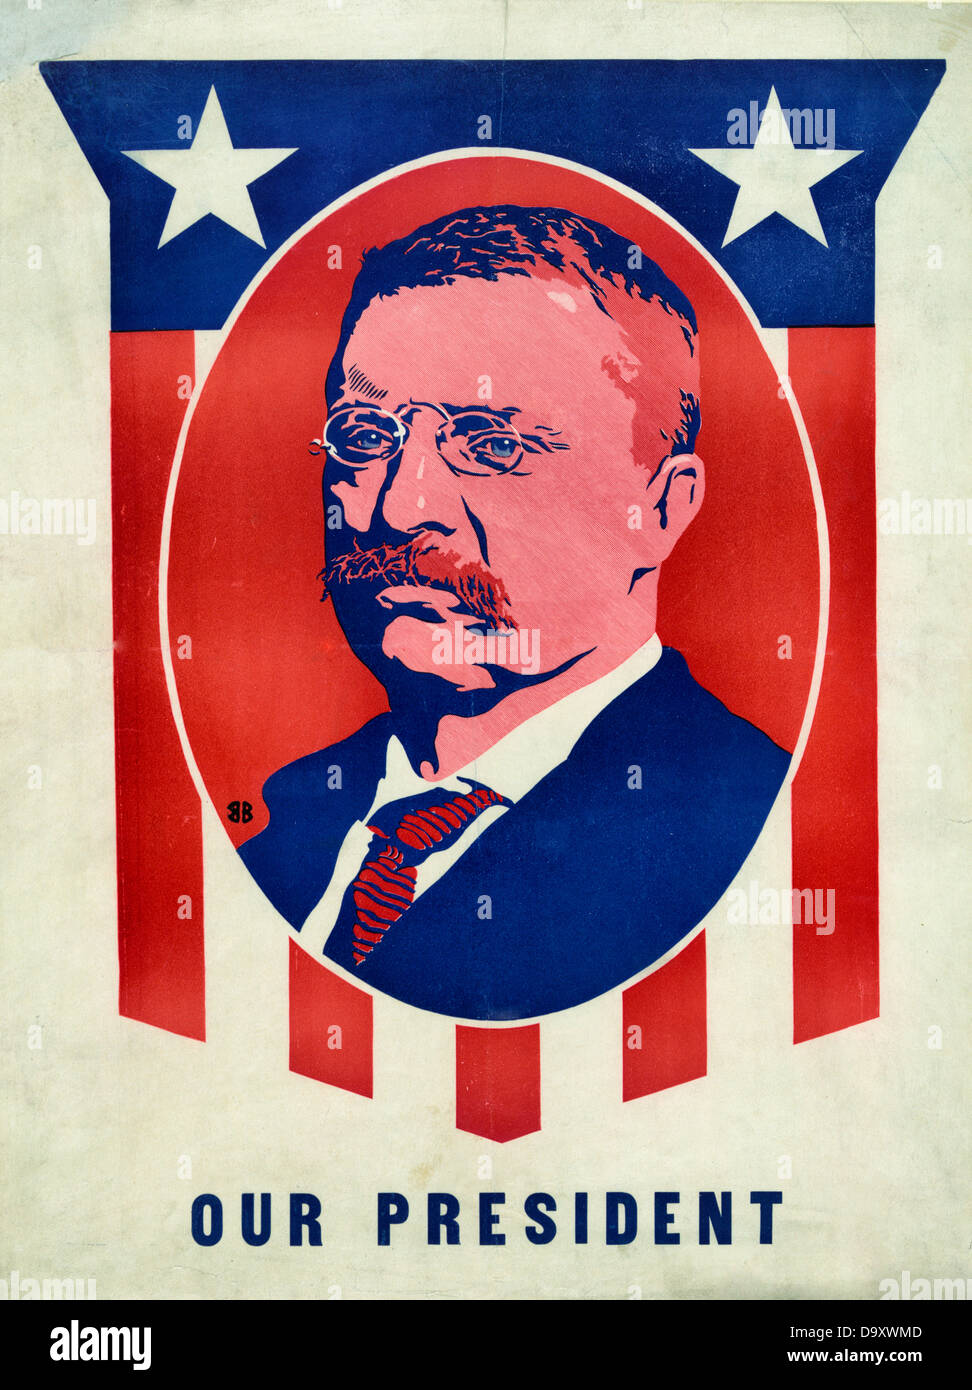 Roosevelt - Our President. Banner for Theodore Roosevelt, USA President 1901 - 1909 Stock Photo